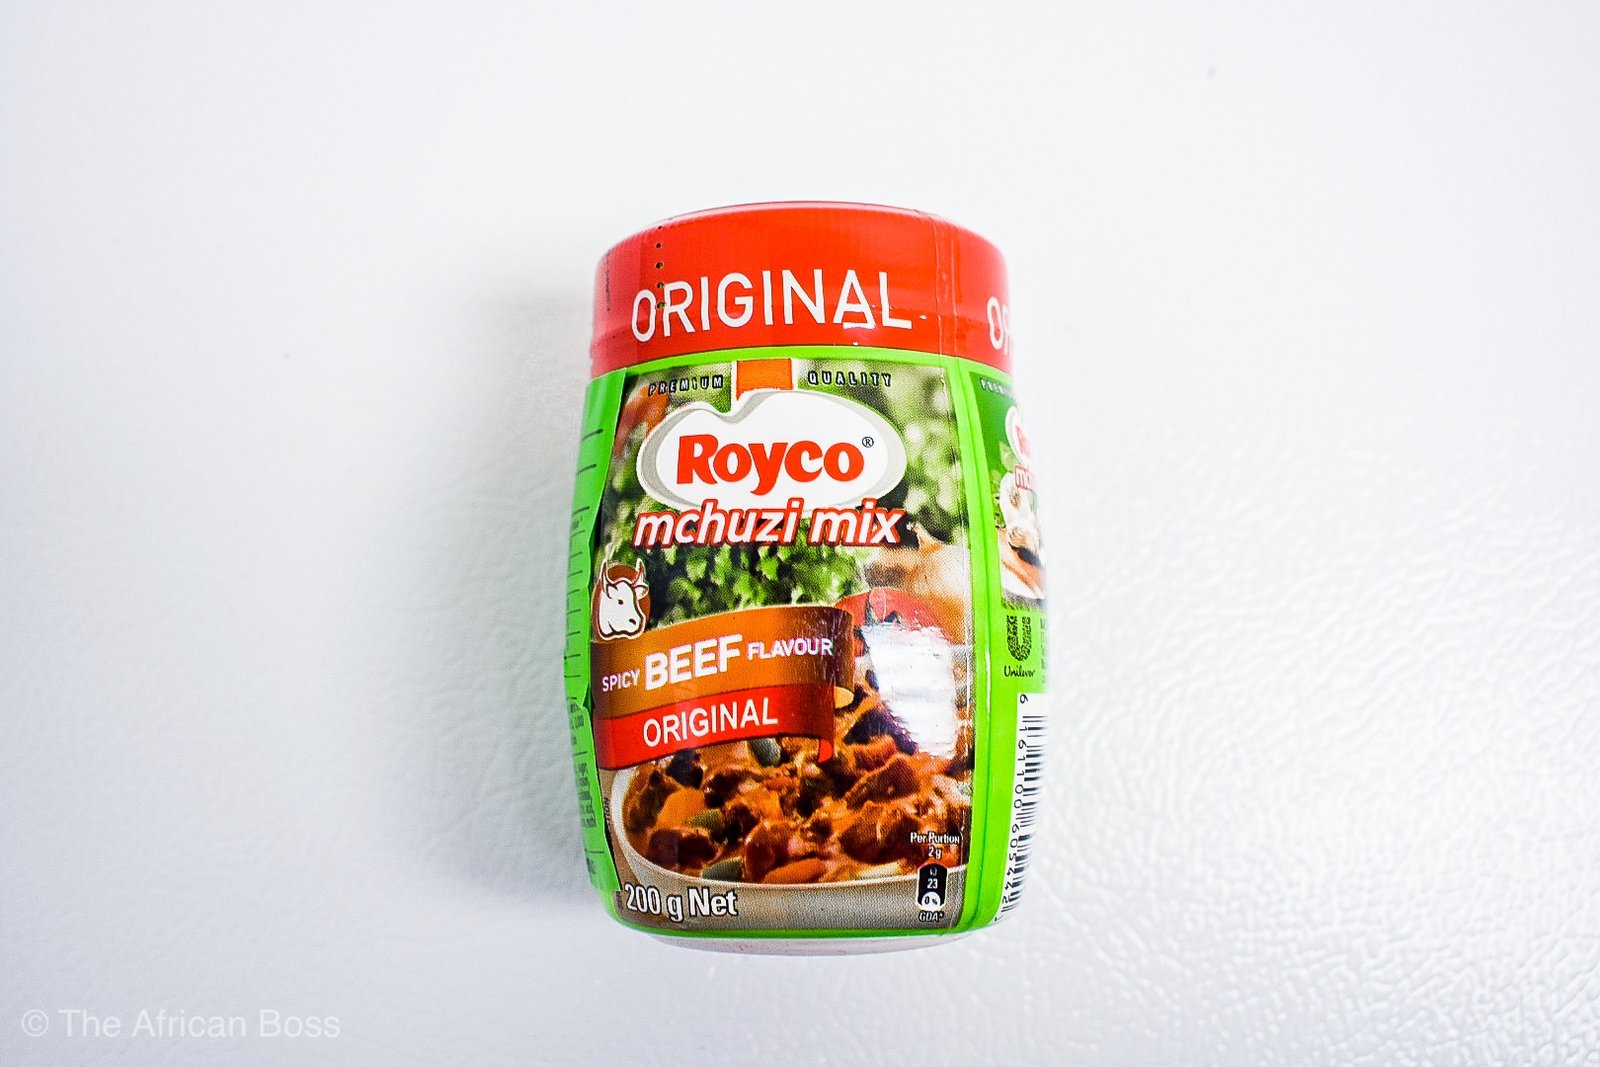 Royco Mchuzi Mix Spicy Beef Flavored Seasoning - Original